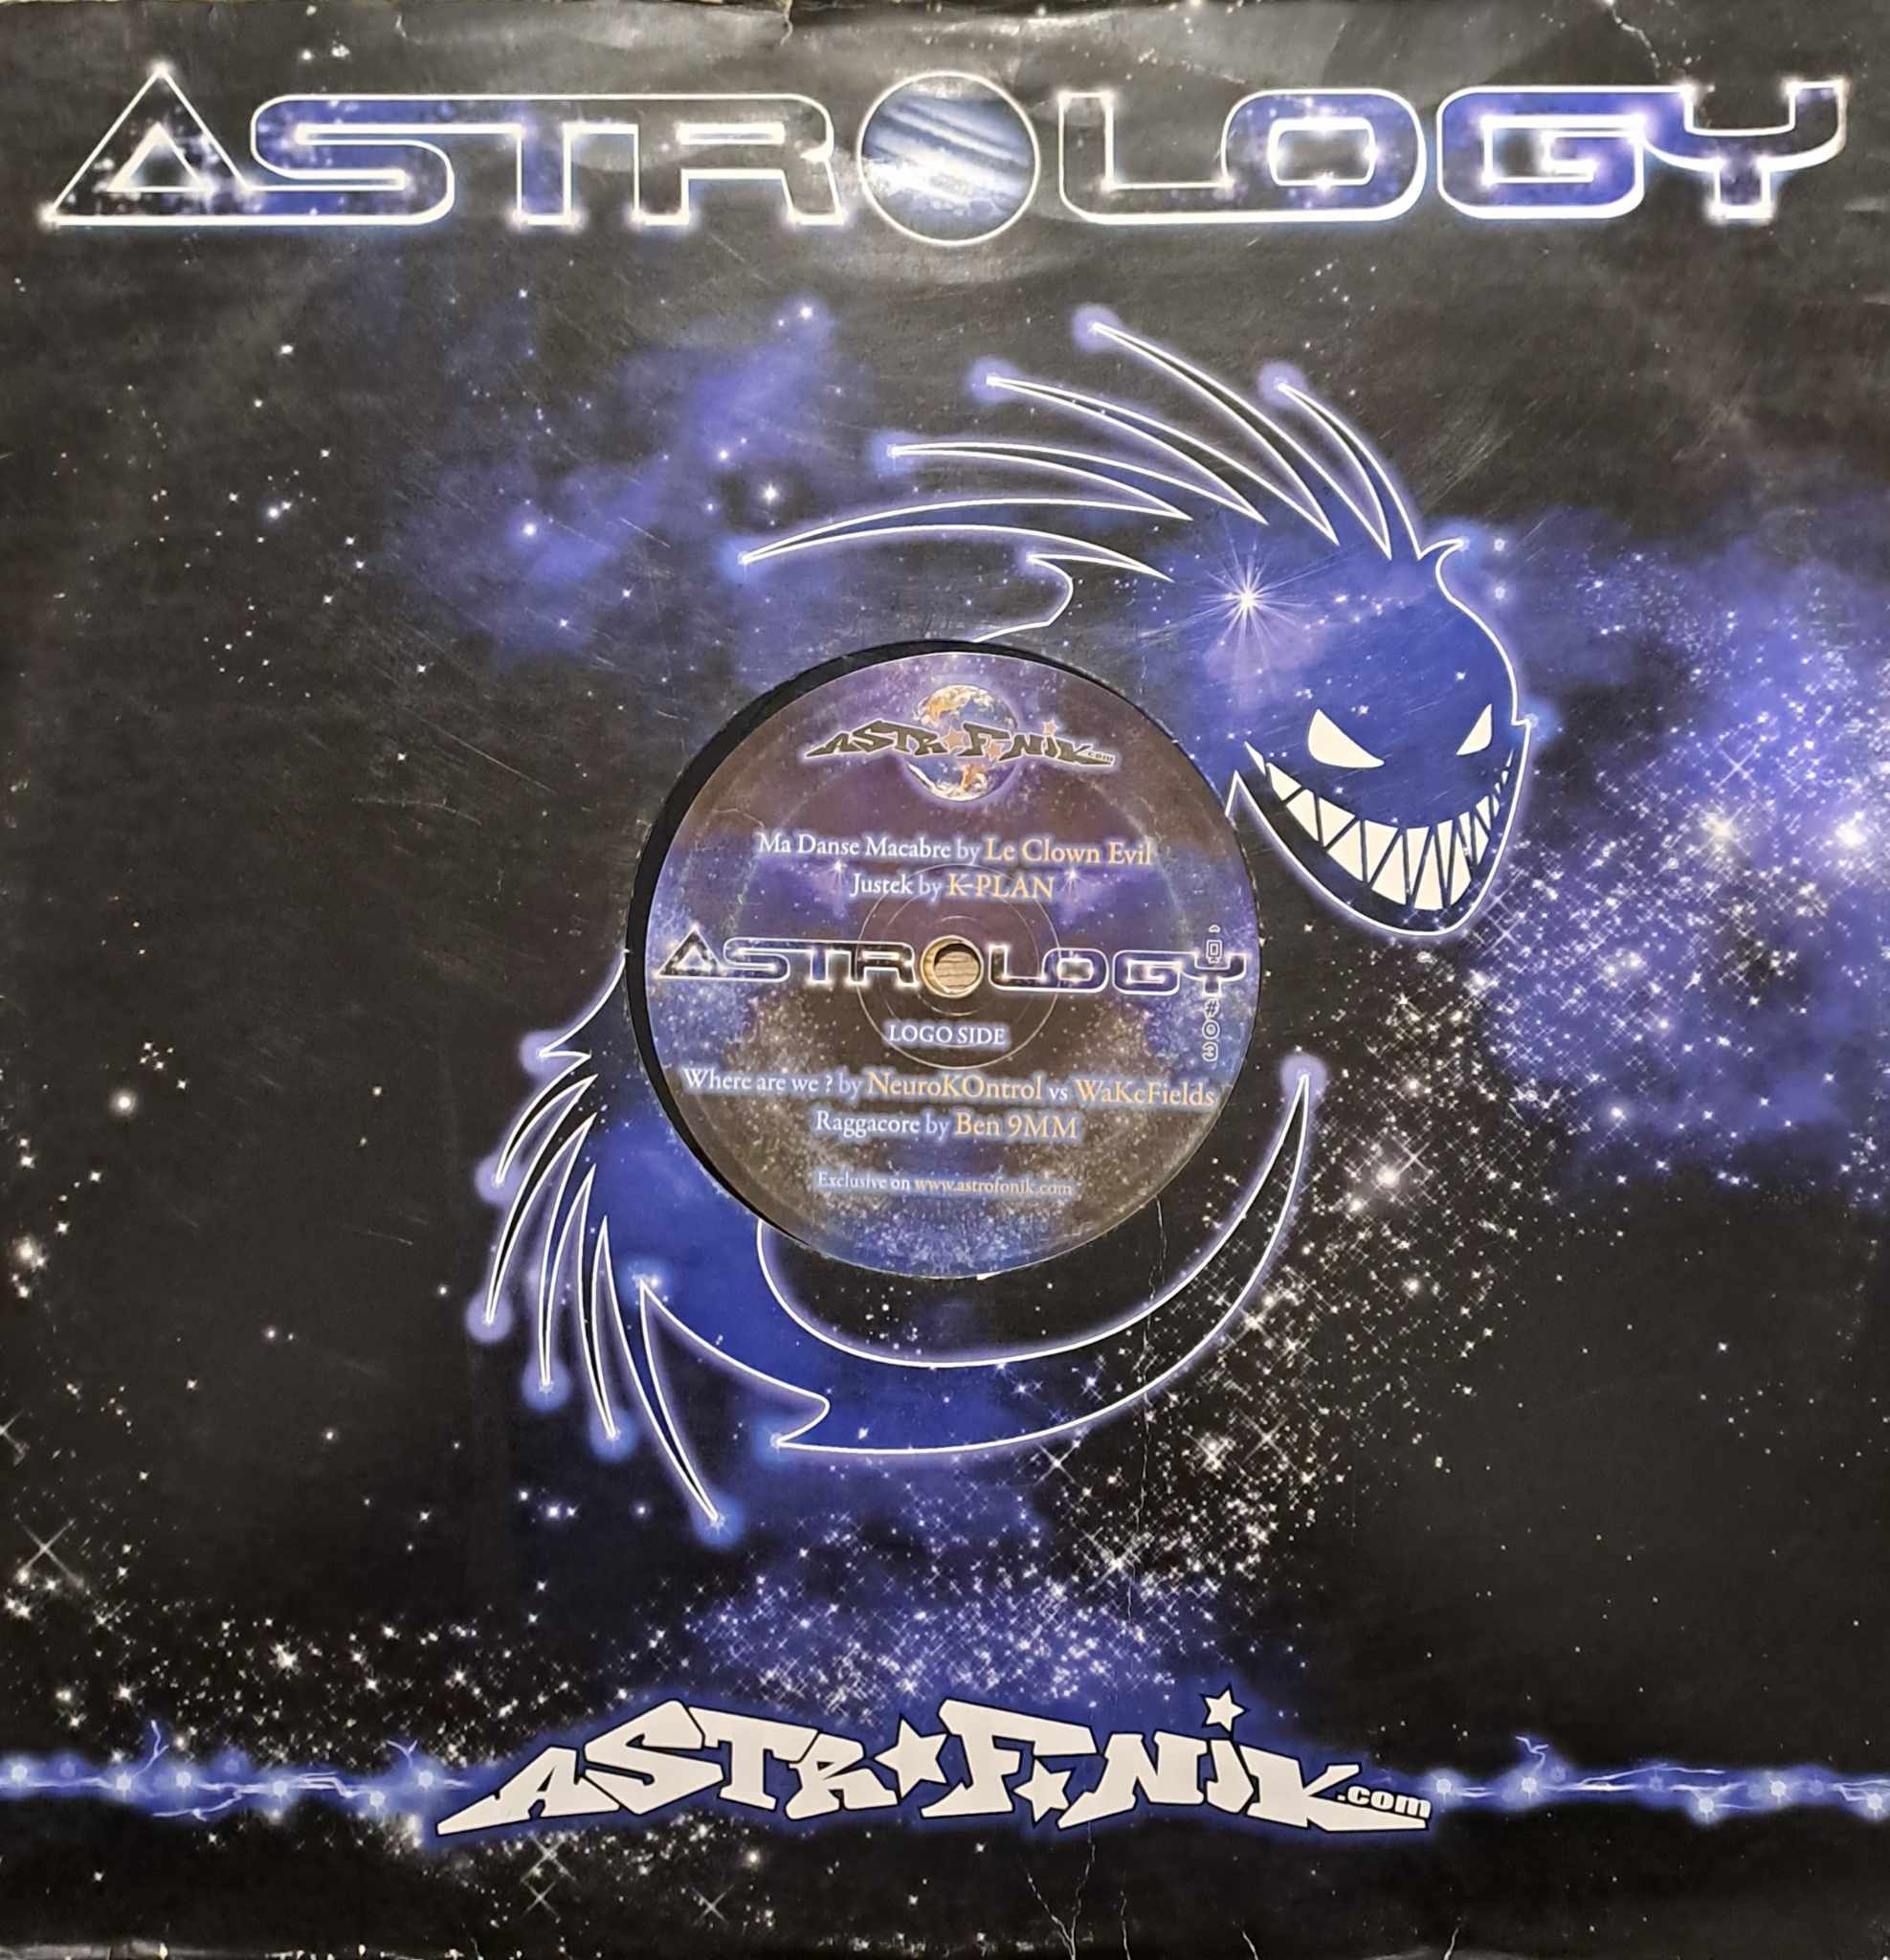 Astrology 03 - vinyle freetekno